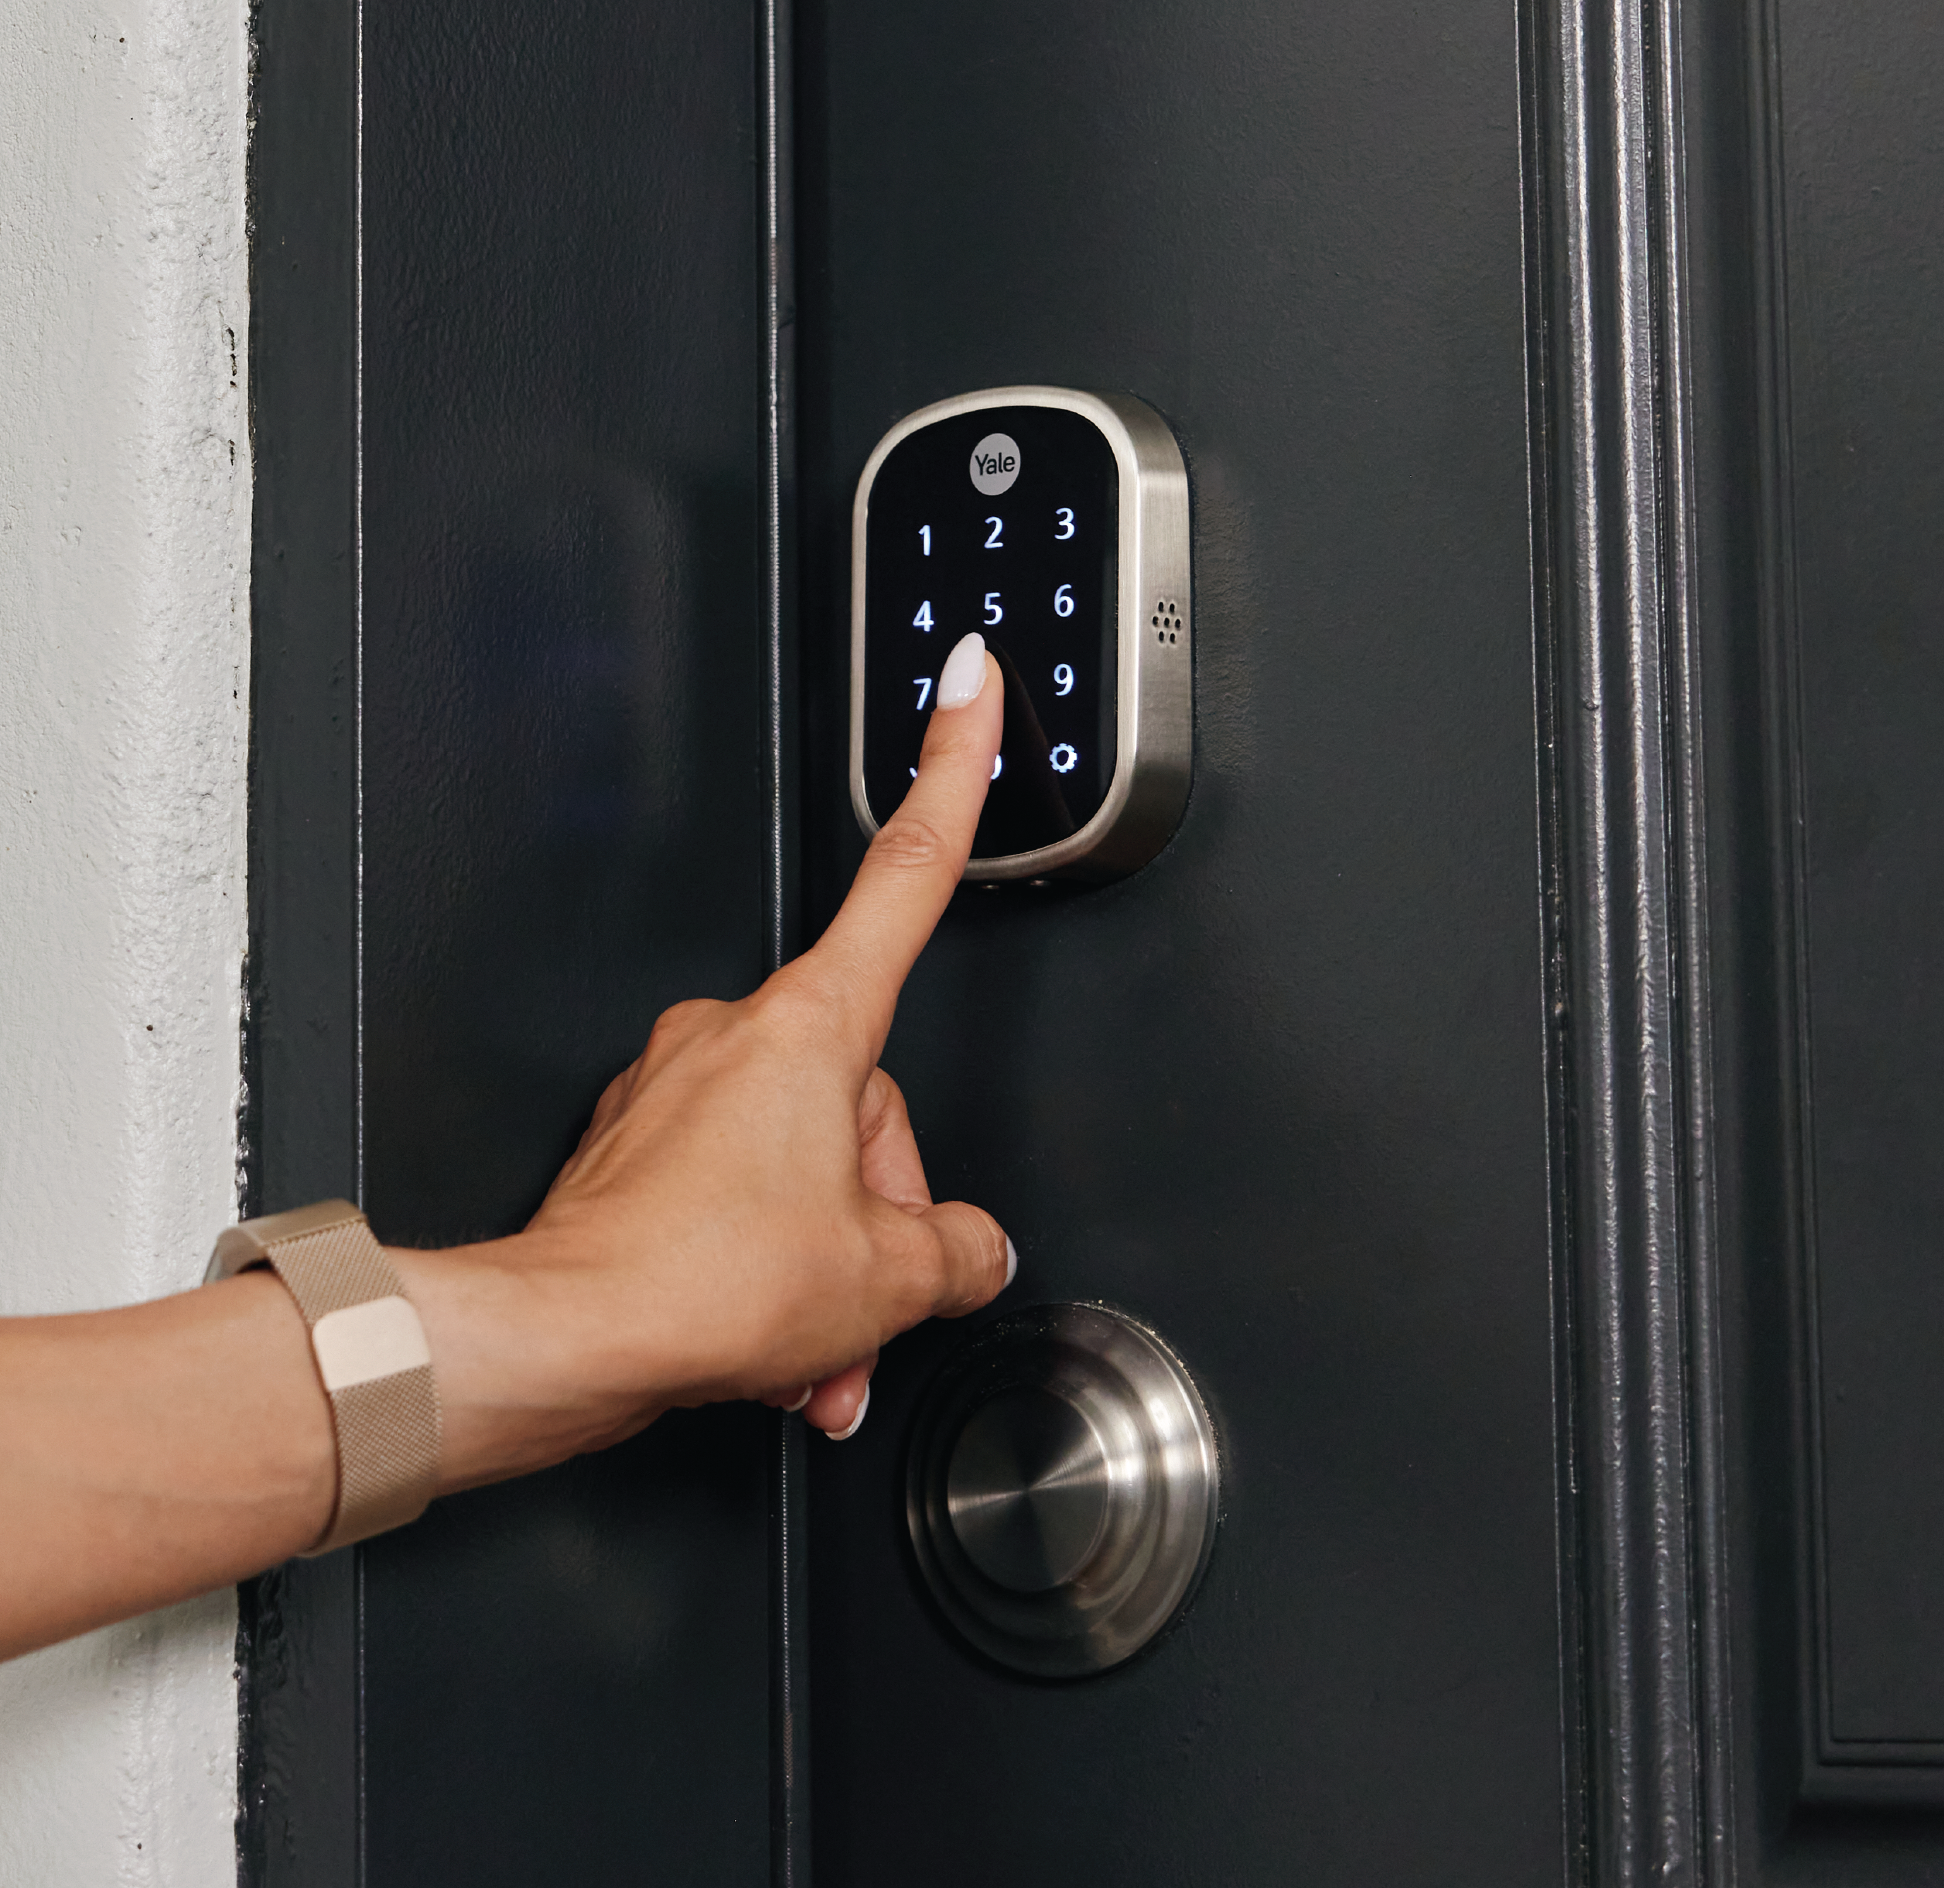 Person unlocks a Smart Lock using their access code